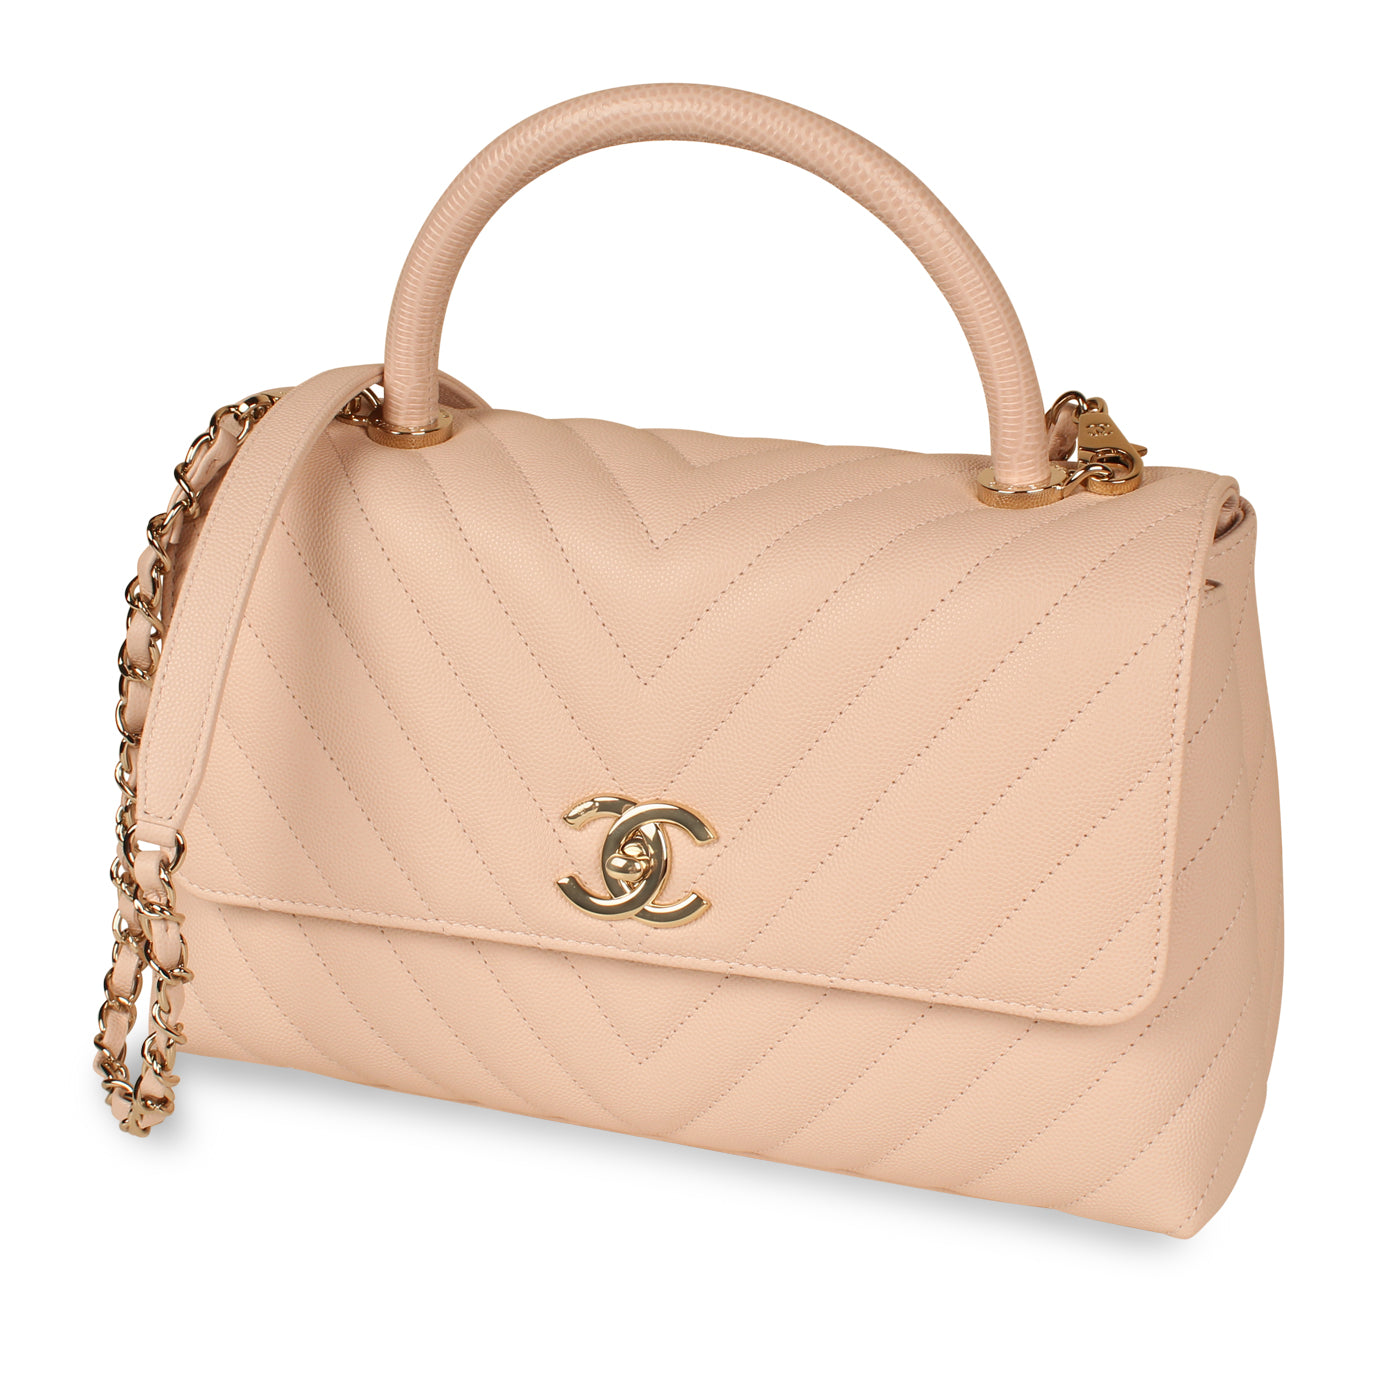 Shop authentic Chanel Medium Filigree Vanity Case at revogue for just USD  4,200.00